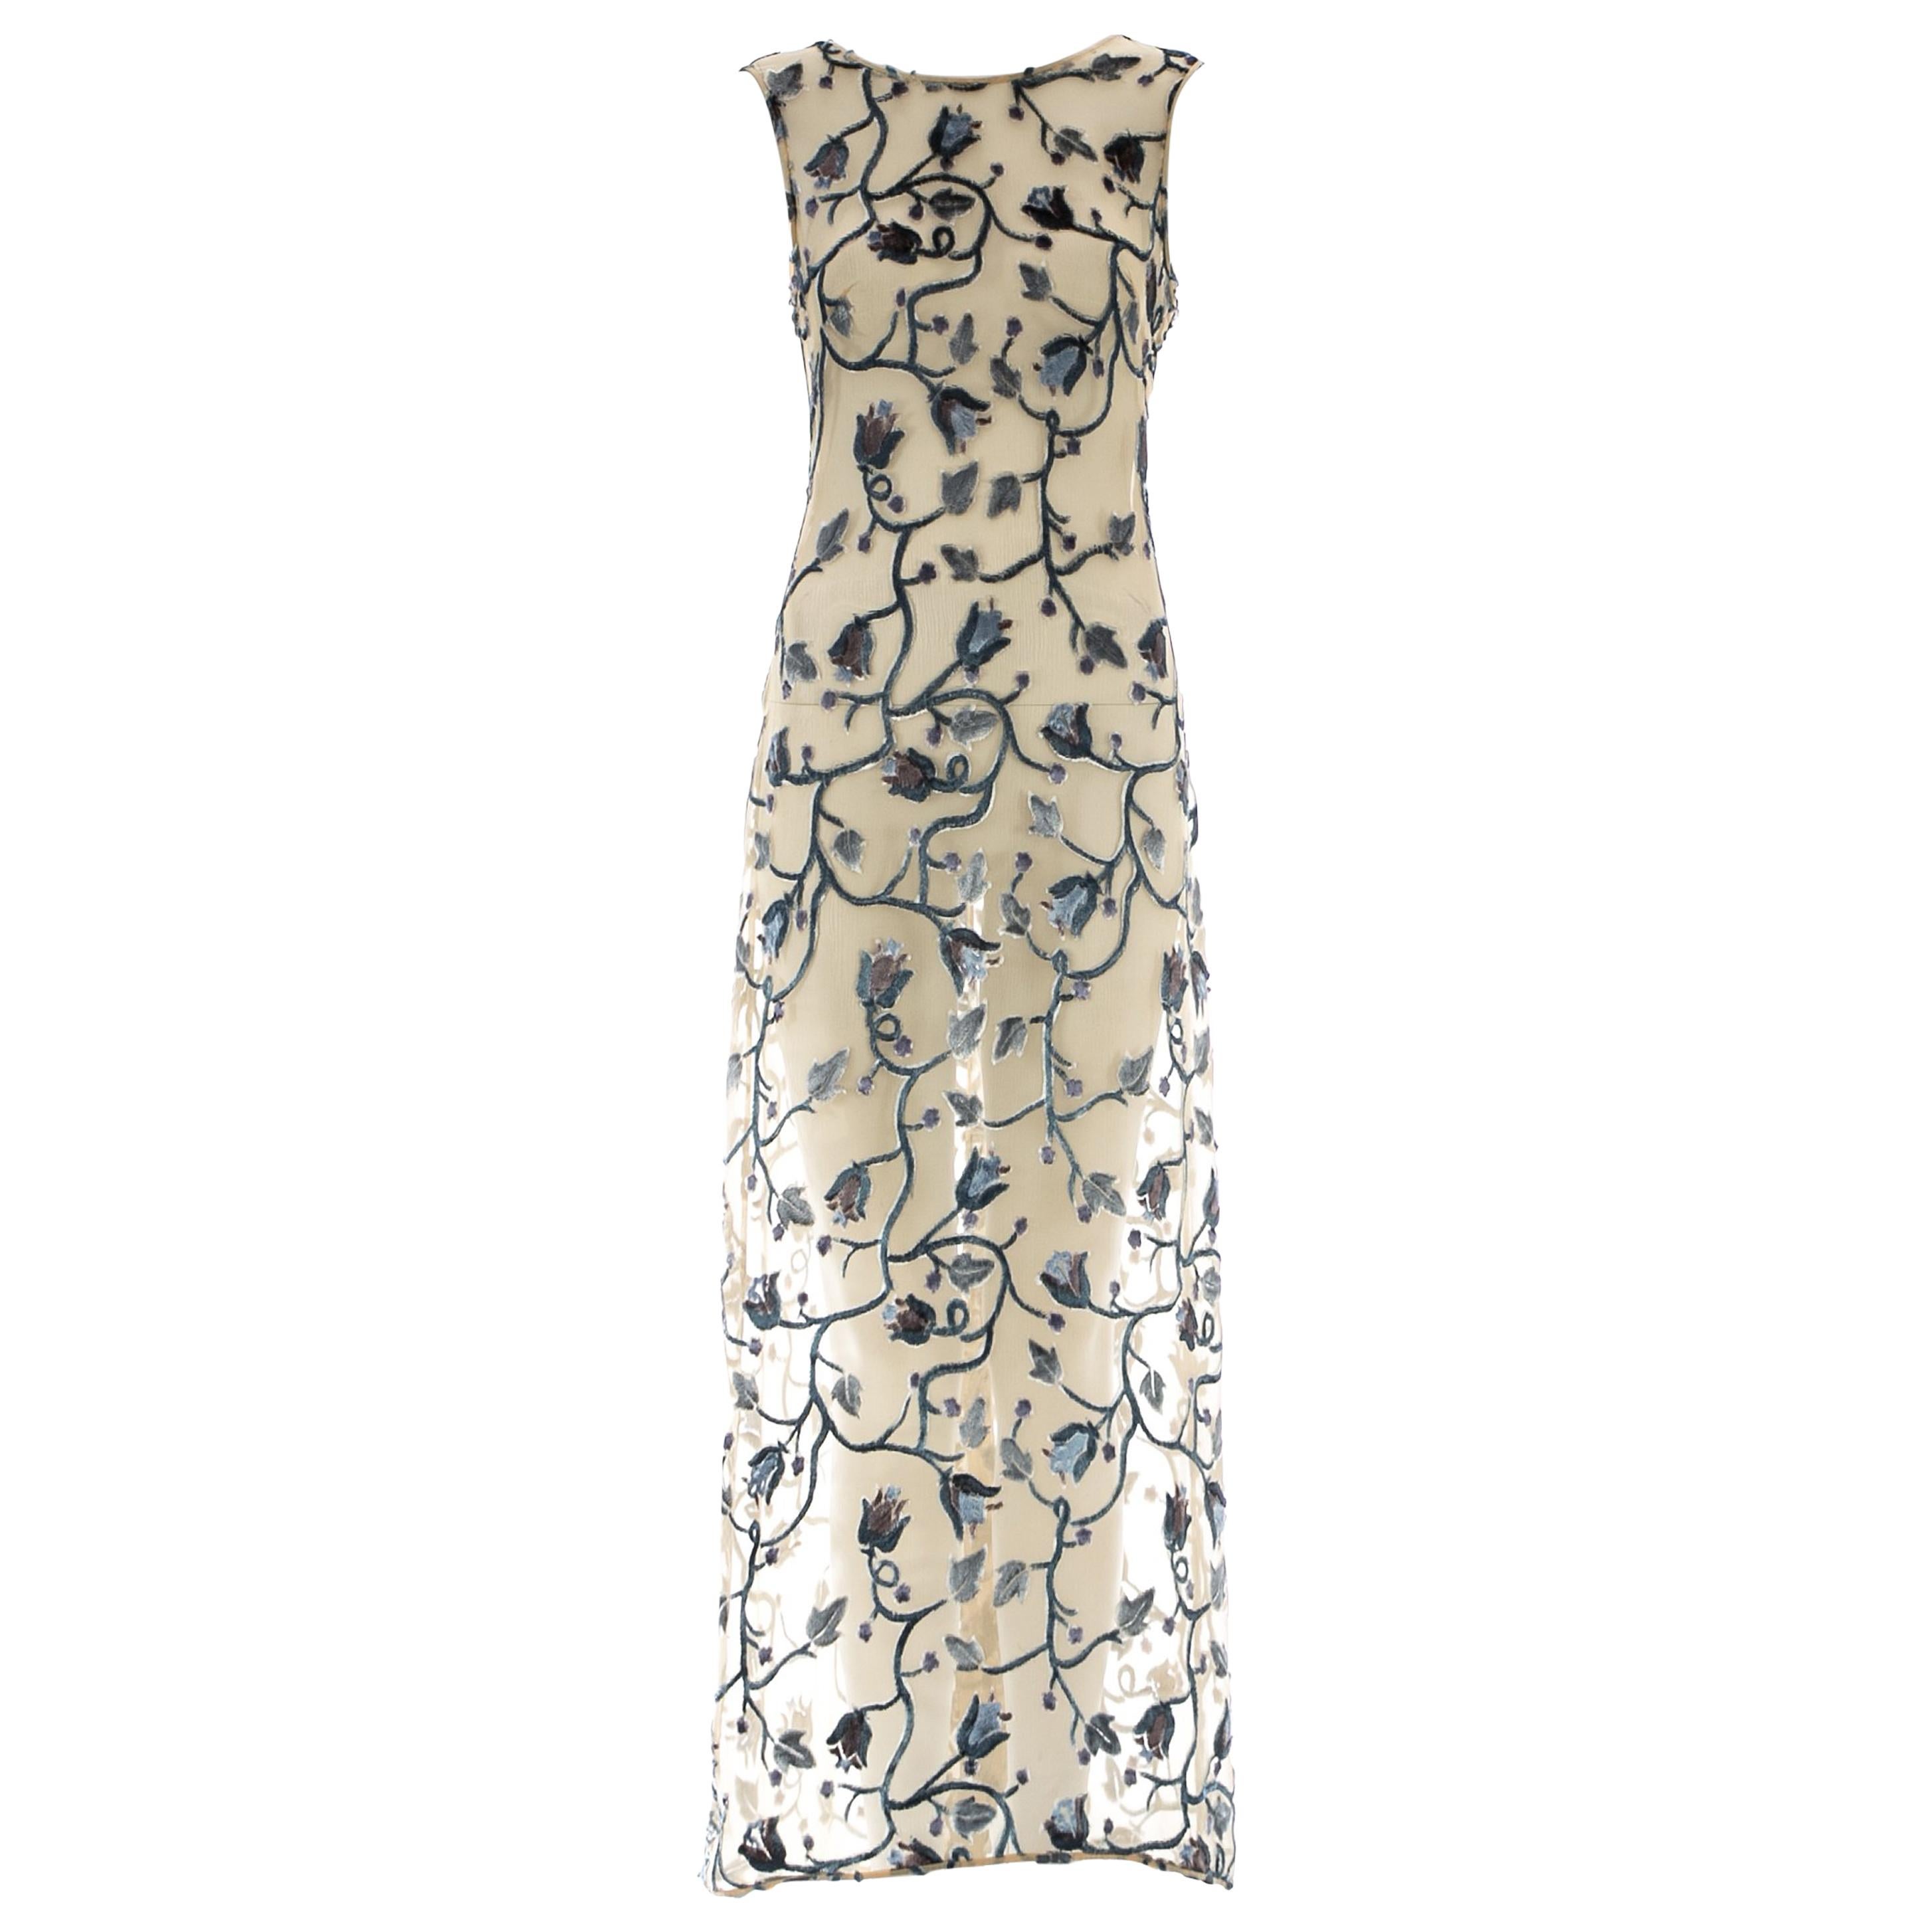 Prada ivory silk devoré floral maxi dress with train and slip dress, ss 1997